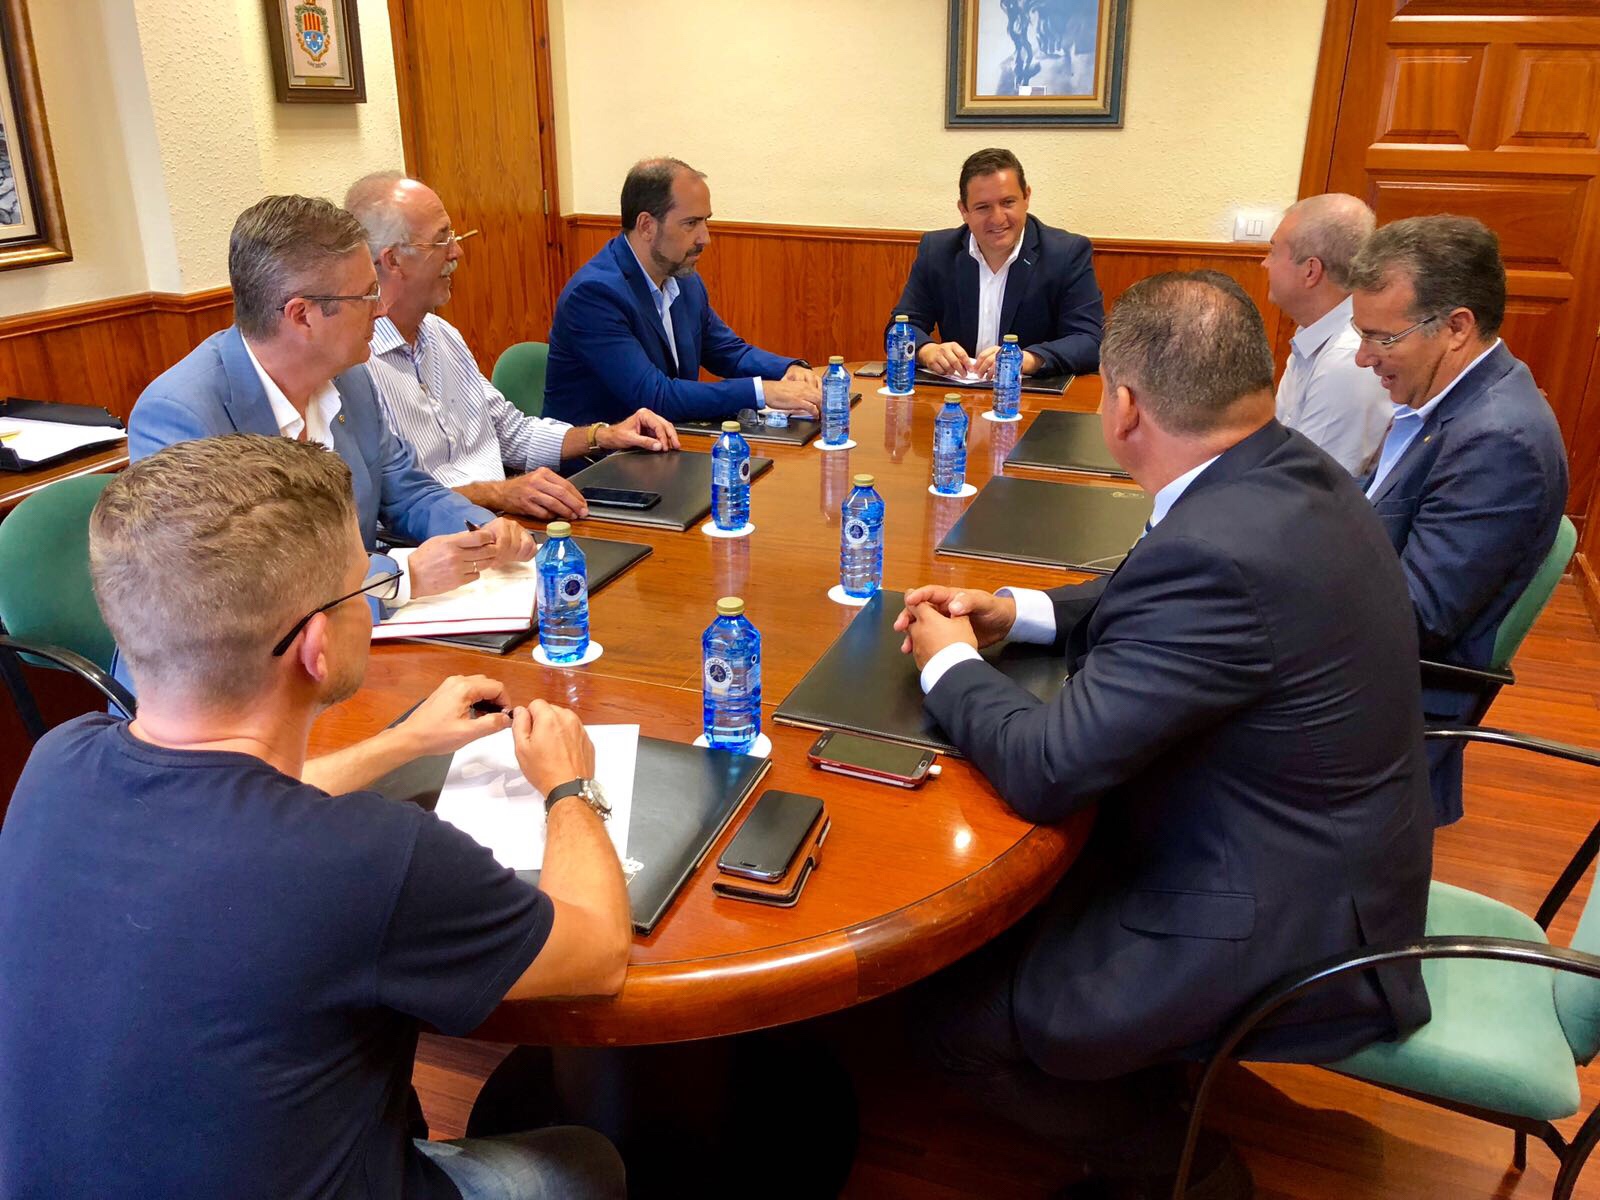 Alcalde de Arona recibe a la Directiva del Rotary Club Tenerife Sur